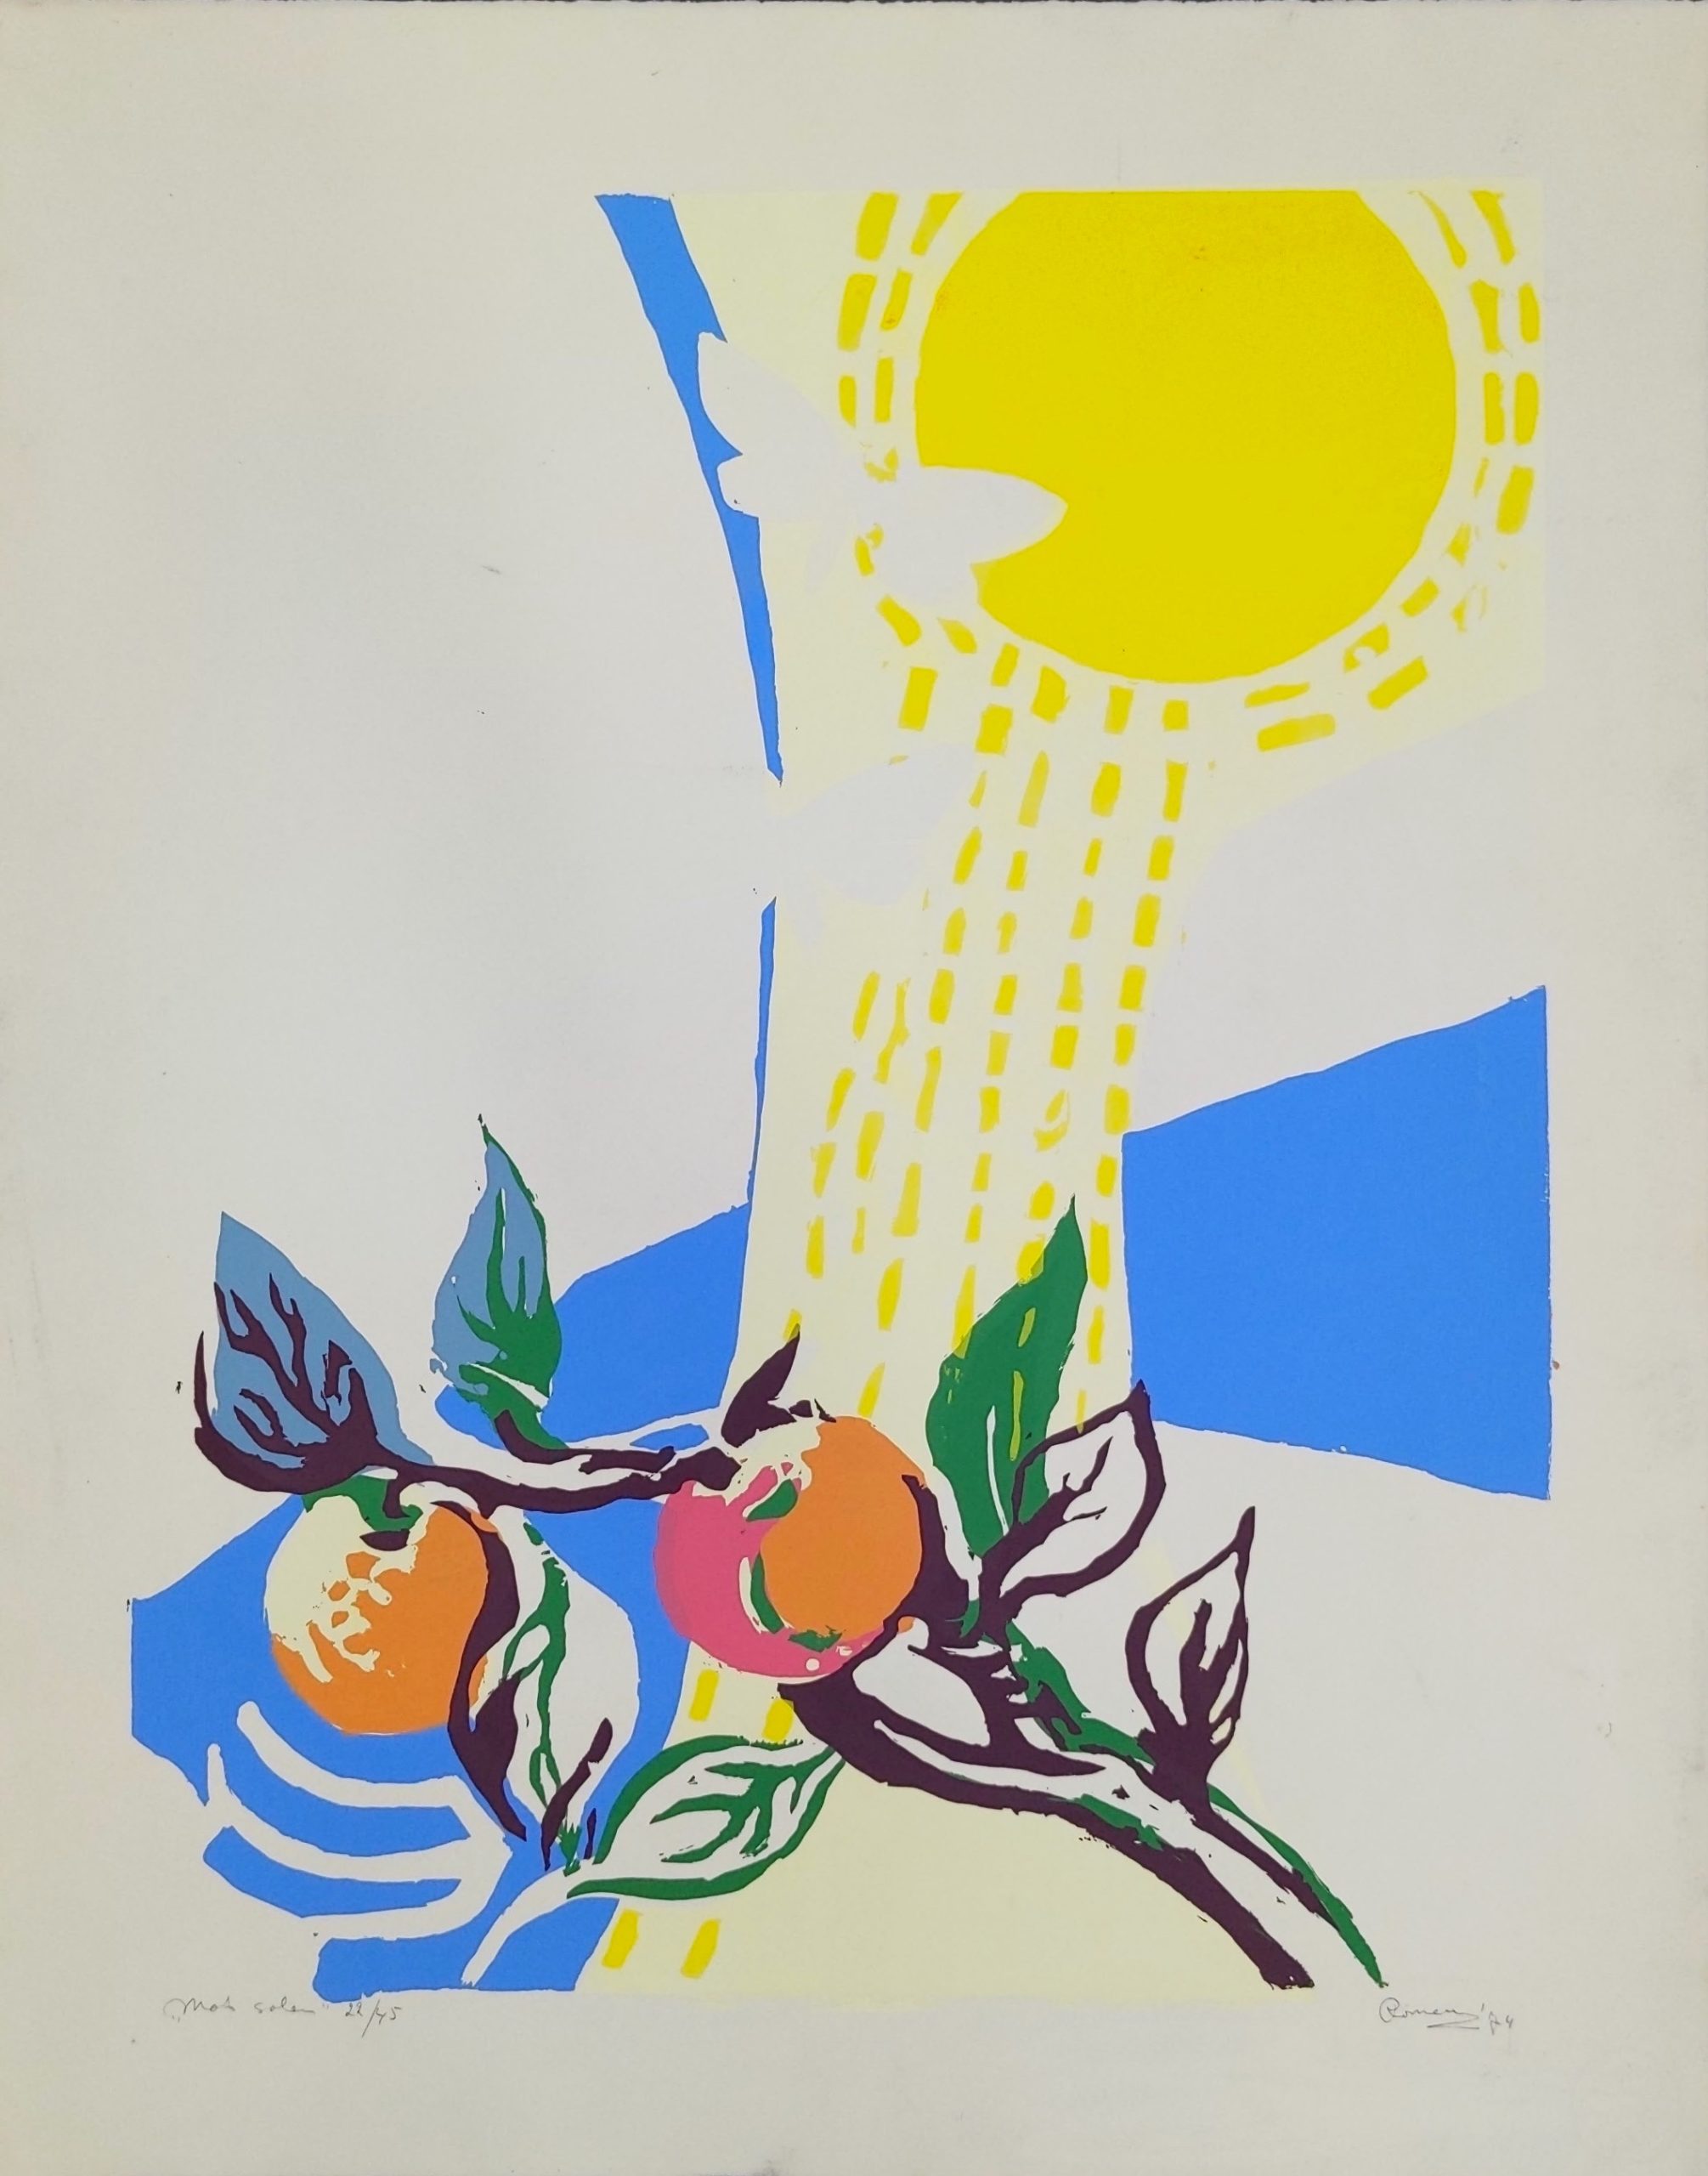 "Mot solen", 1974, screentryck 61x 45 cm. Ed. 45.  3 200 kr (320 €)